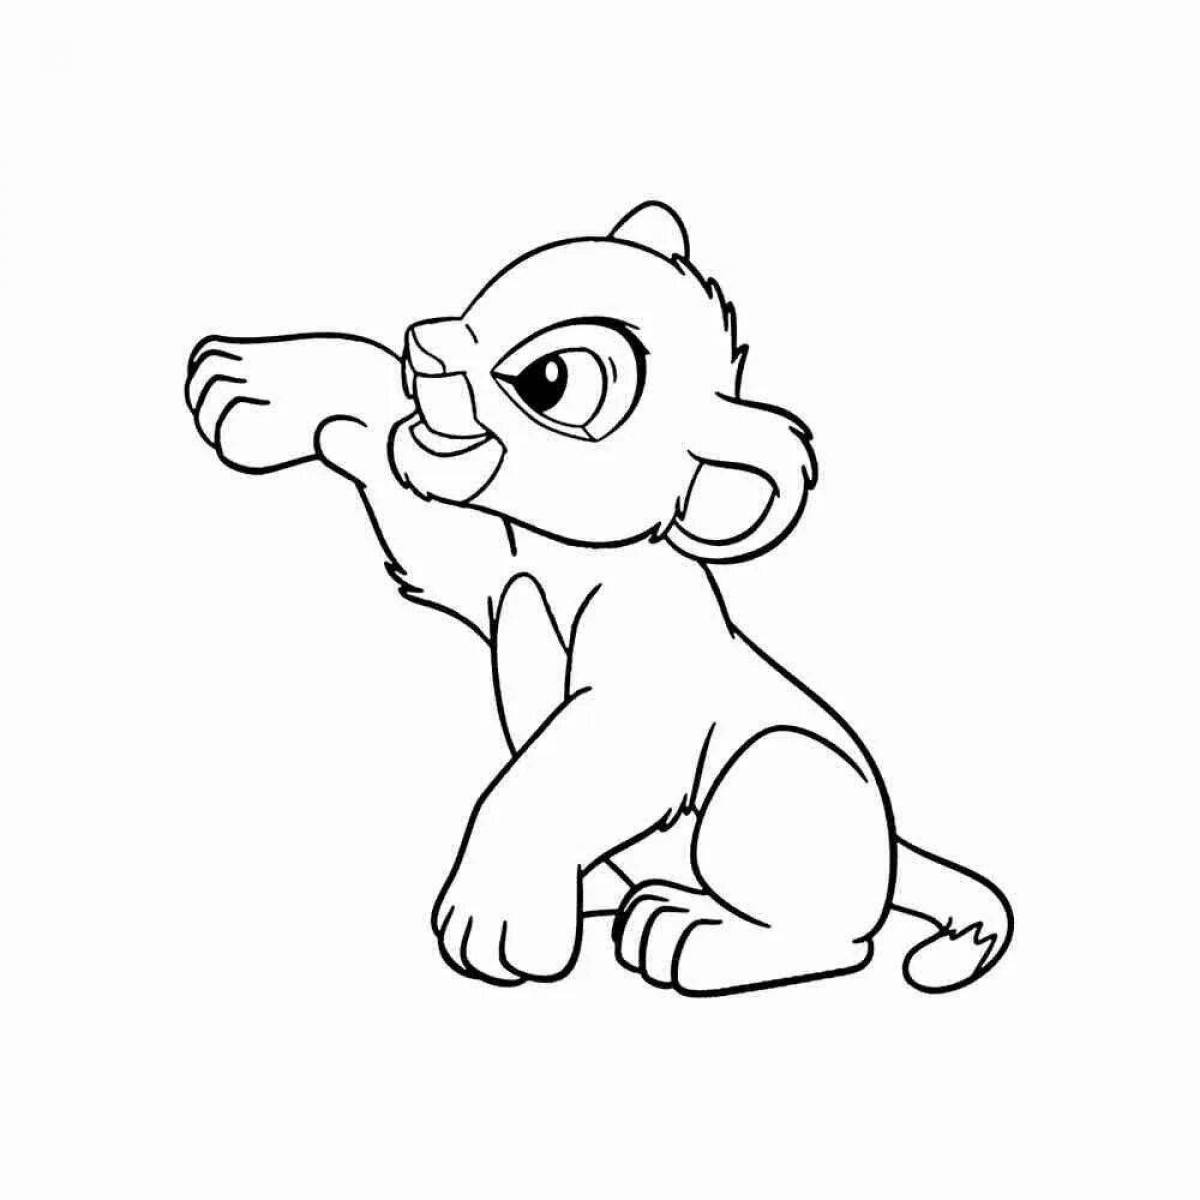 Fun coloring Simba for kids